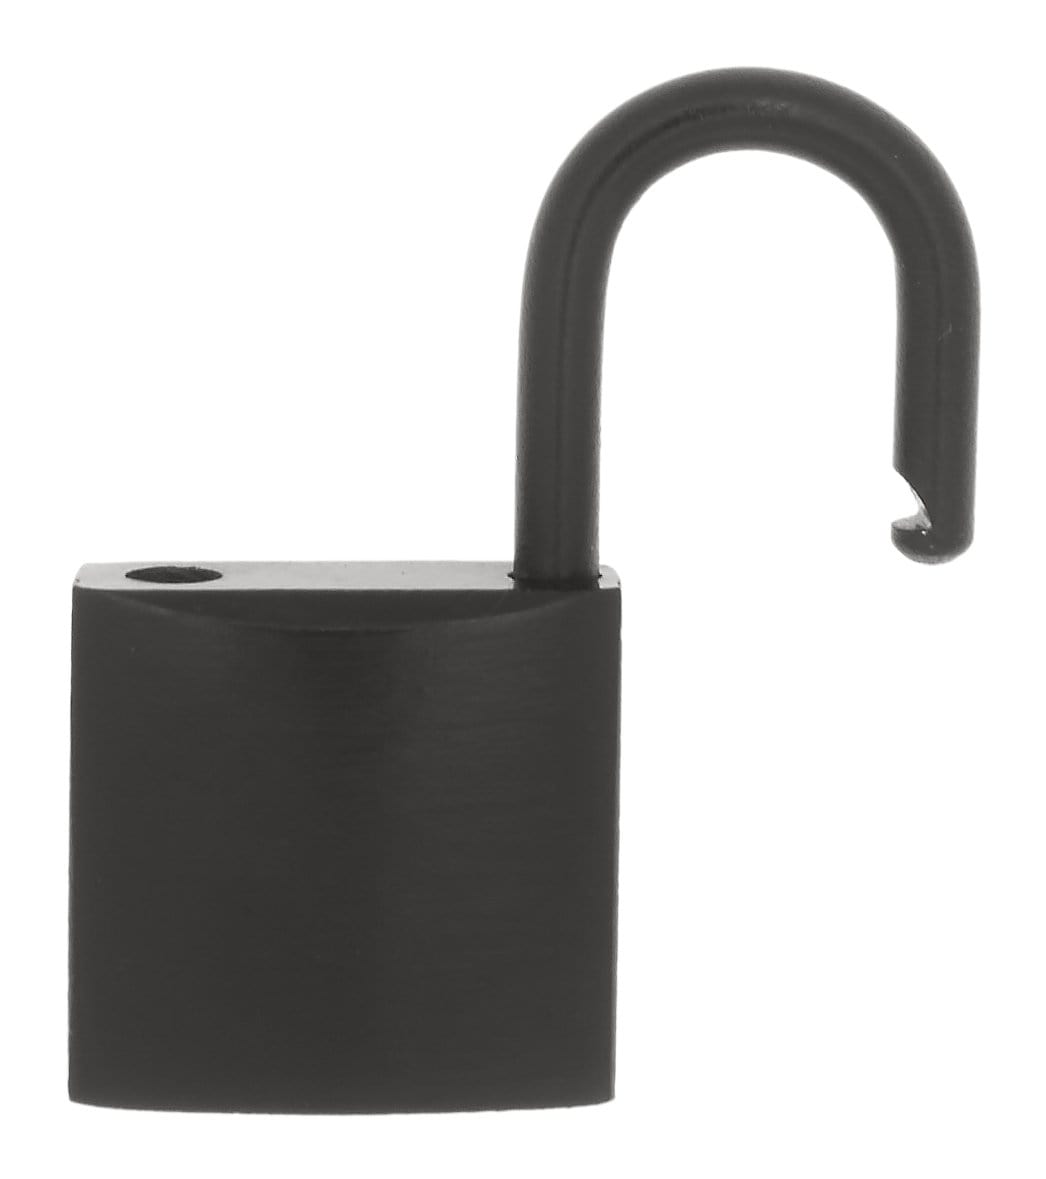 YKK Barrel Cord Lock - 3/16 - Black